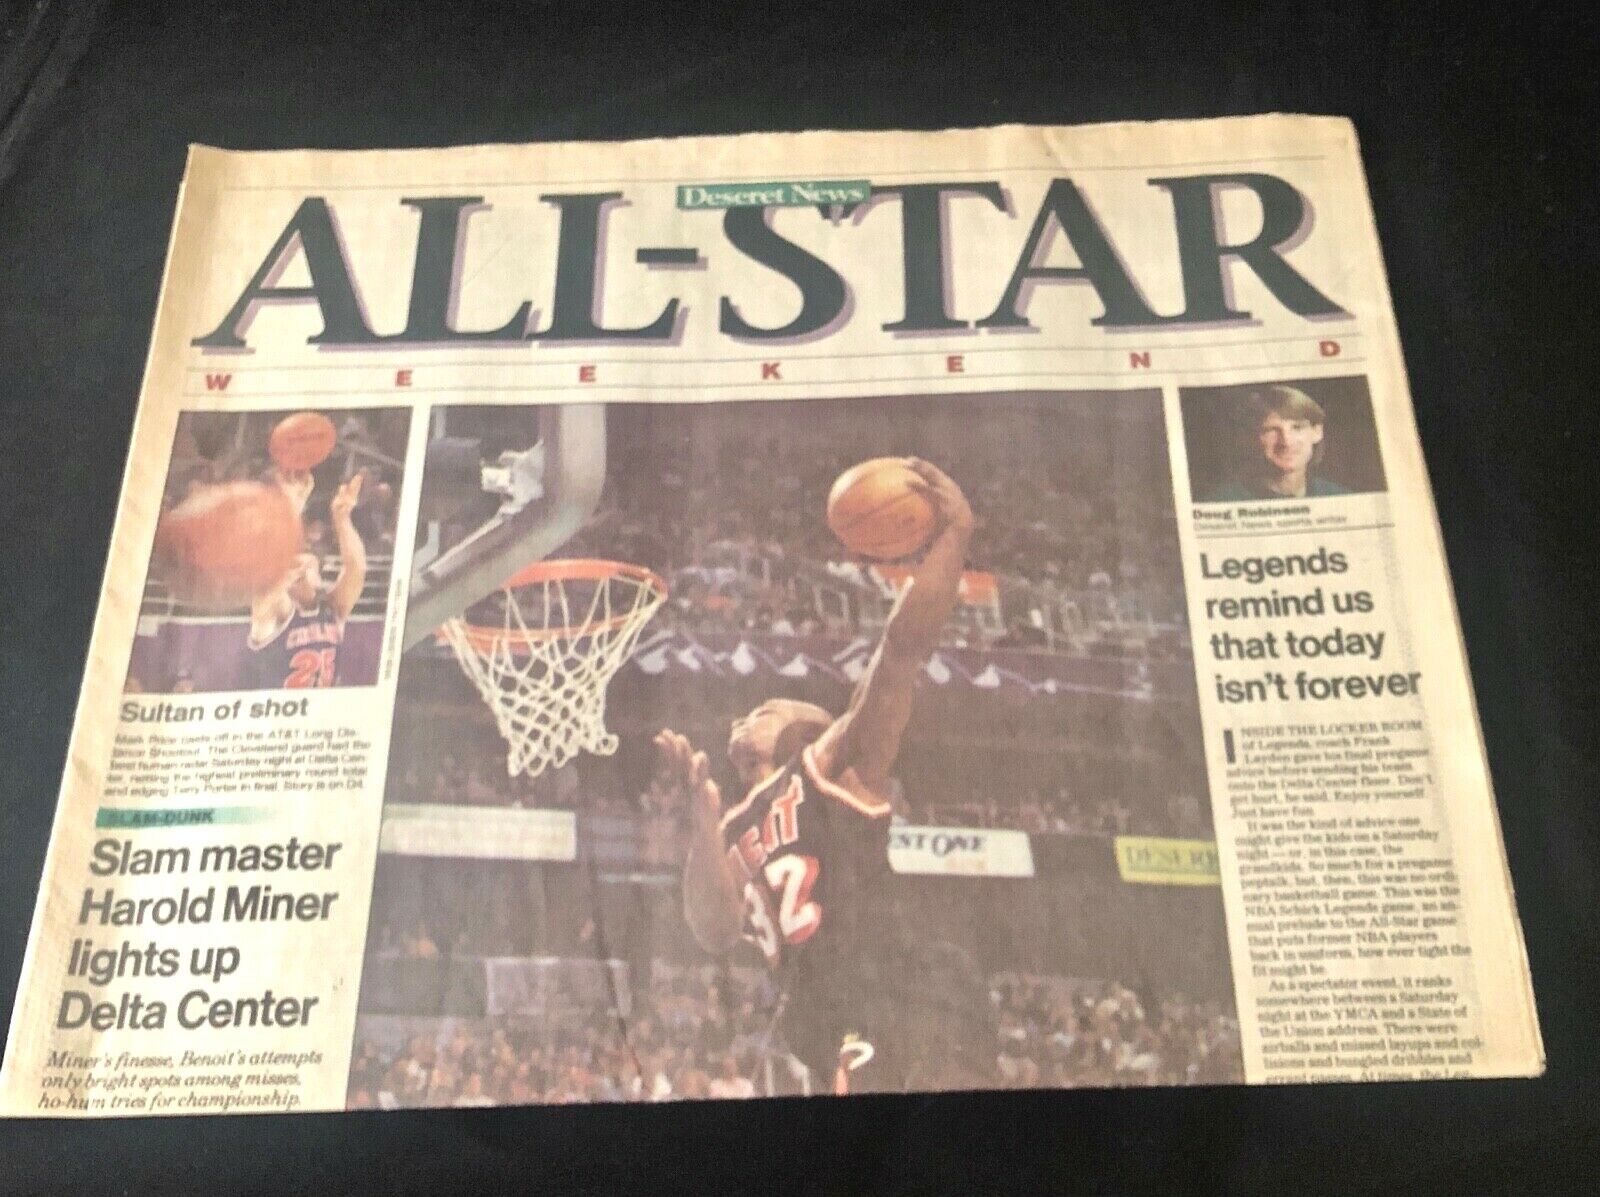 HAROLD MINER "BABY JORDAN" WINS 1993 NBA SLAM DUNK TITLE- UTAH NEWSPAPERS (2) Deseret News + Salt Lake Tribune - фотография #3